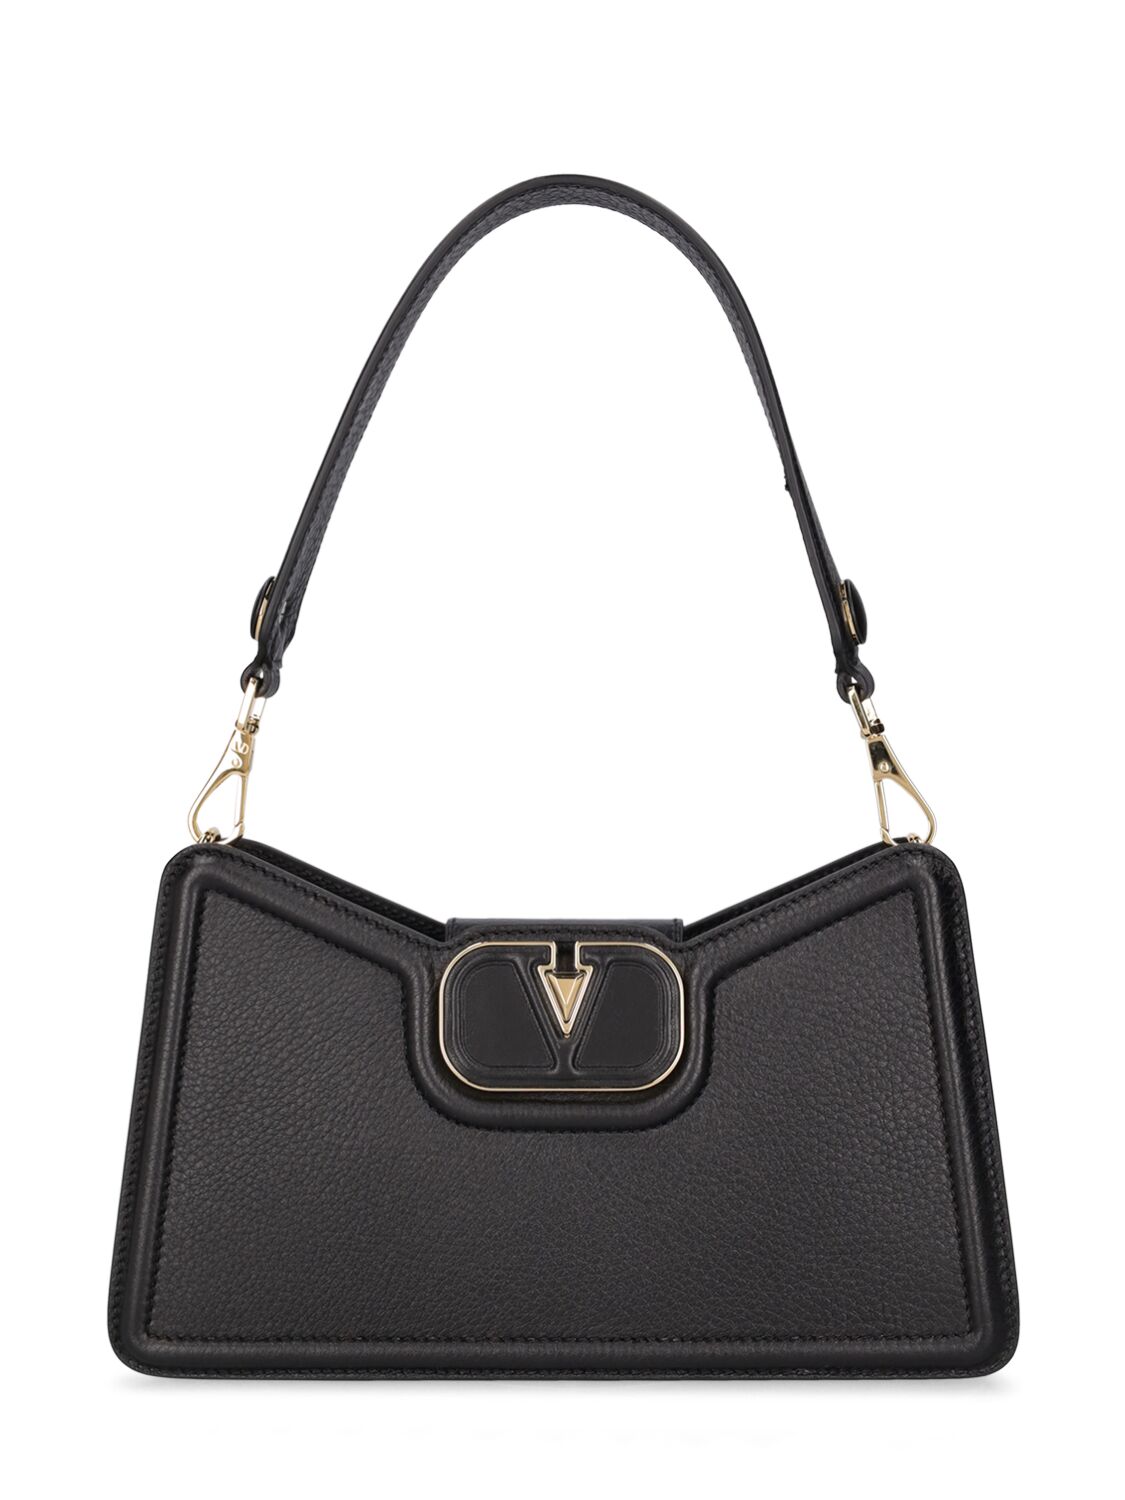 Valentino Garavani V Logo Leather Shoulder Bag In Black